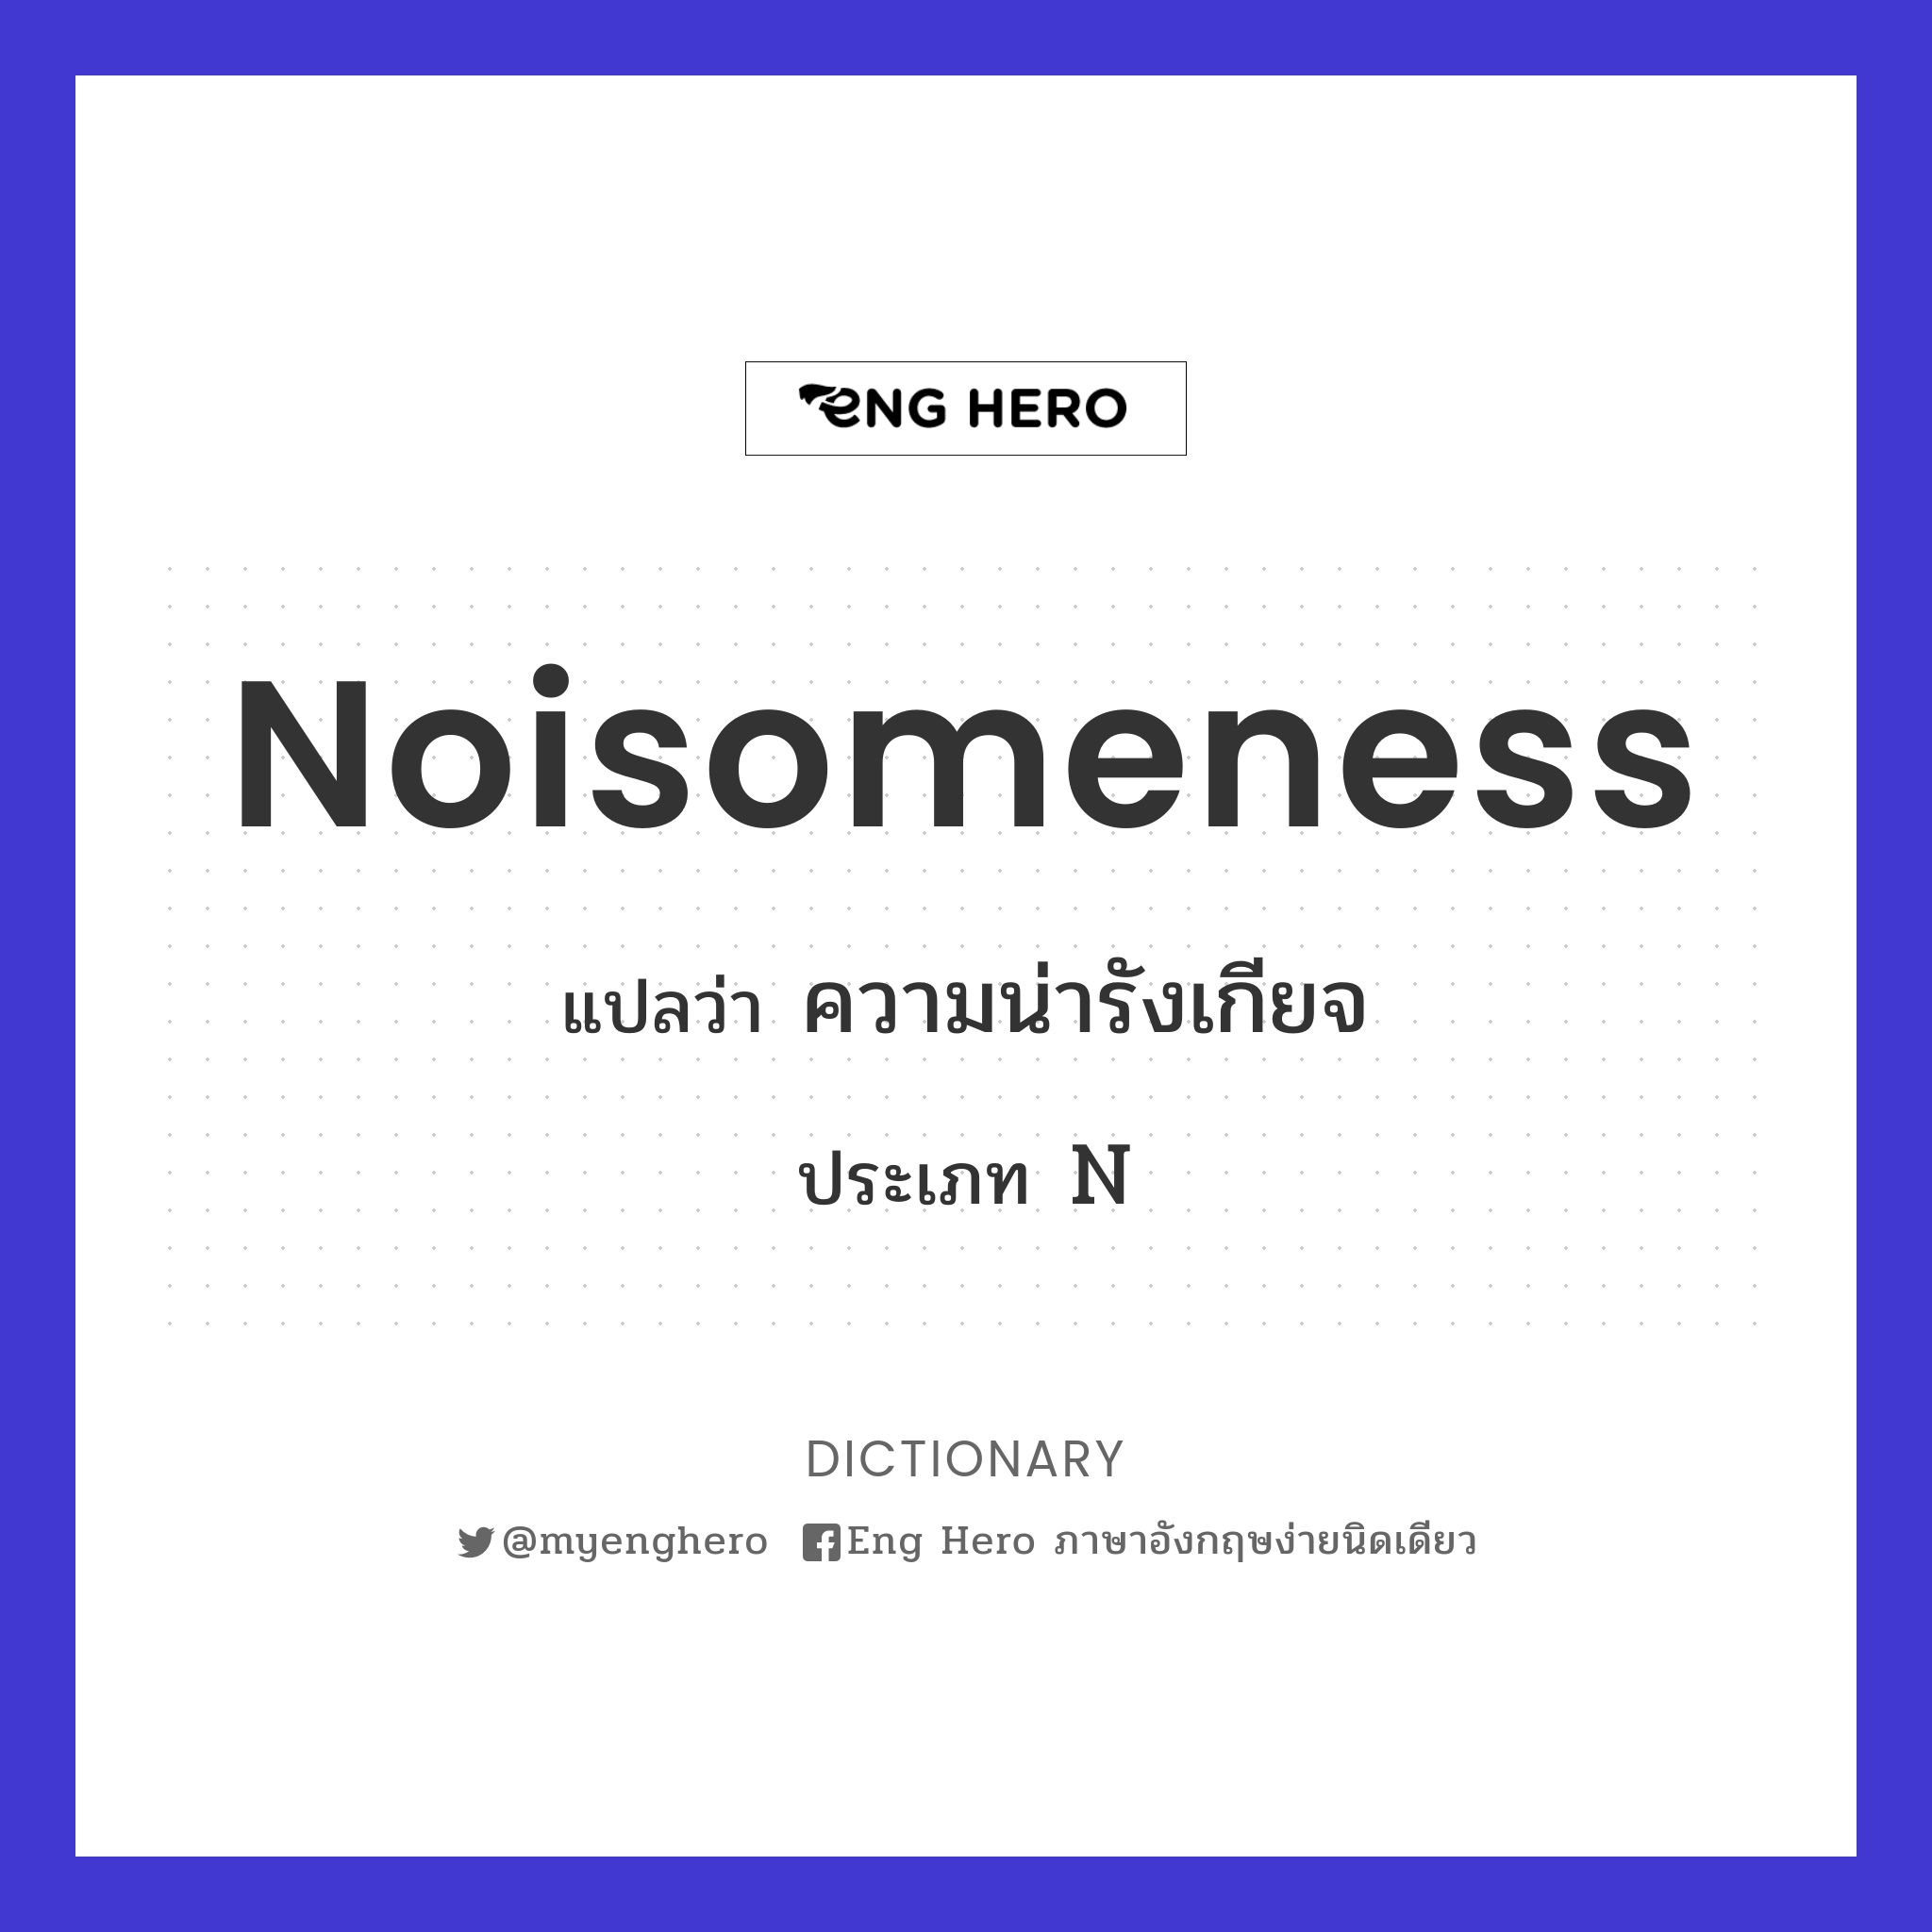 noisomeness